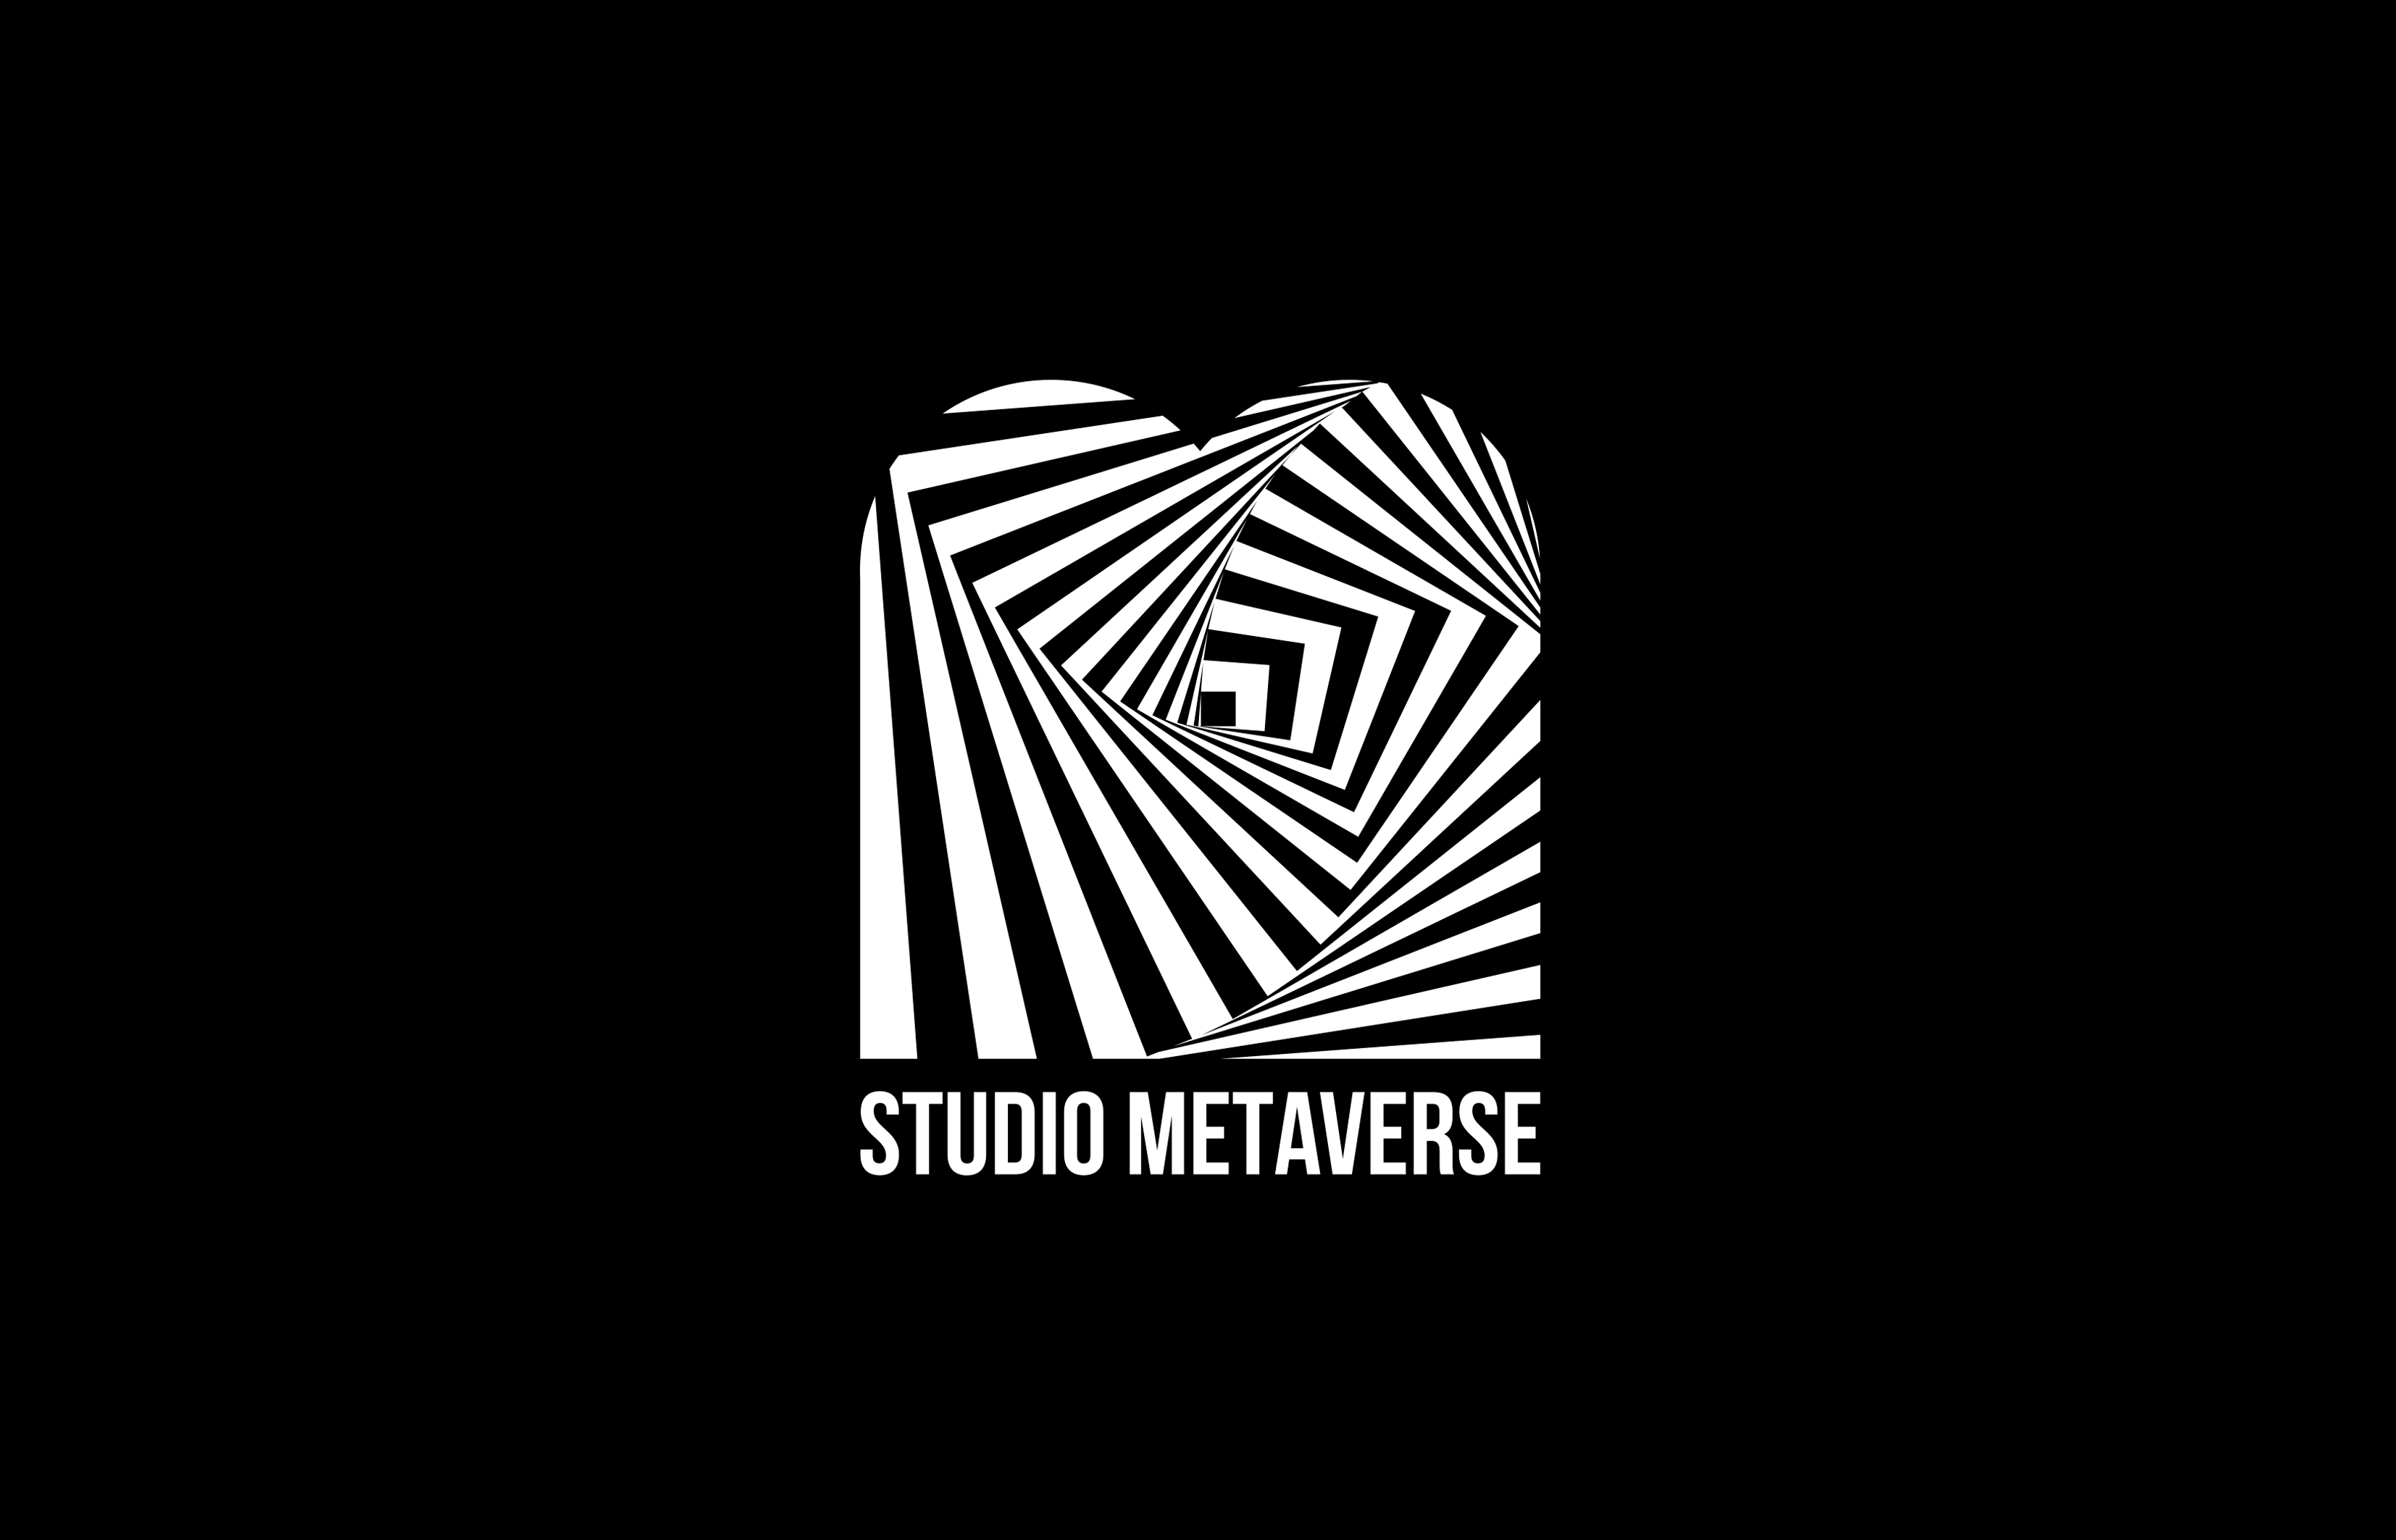 Studio Metaverse Brand Identity Design Created By Lemon Yellow